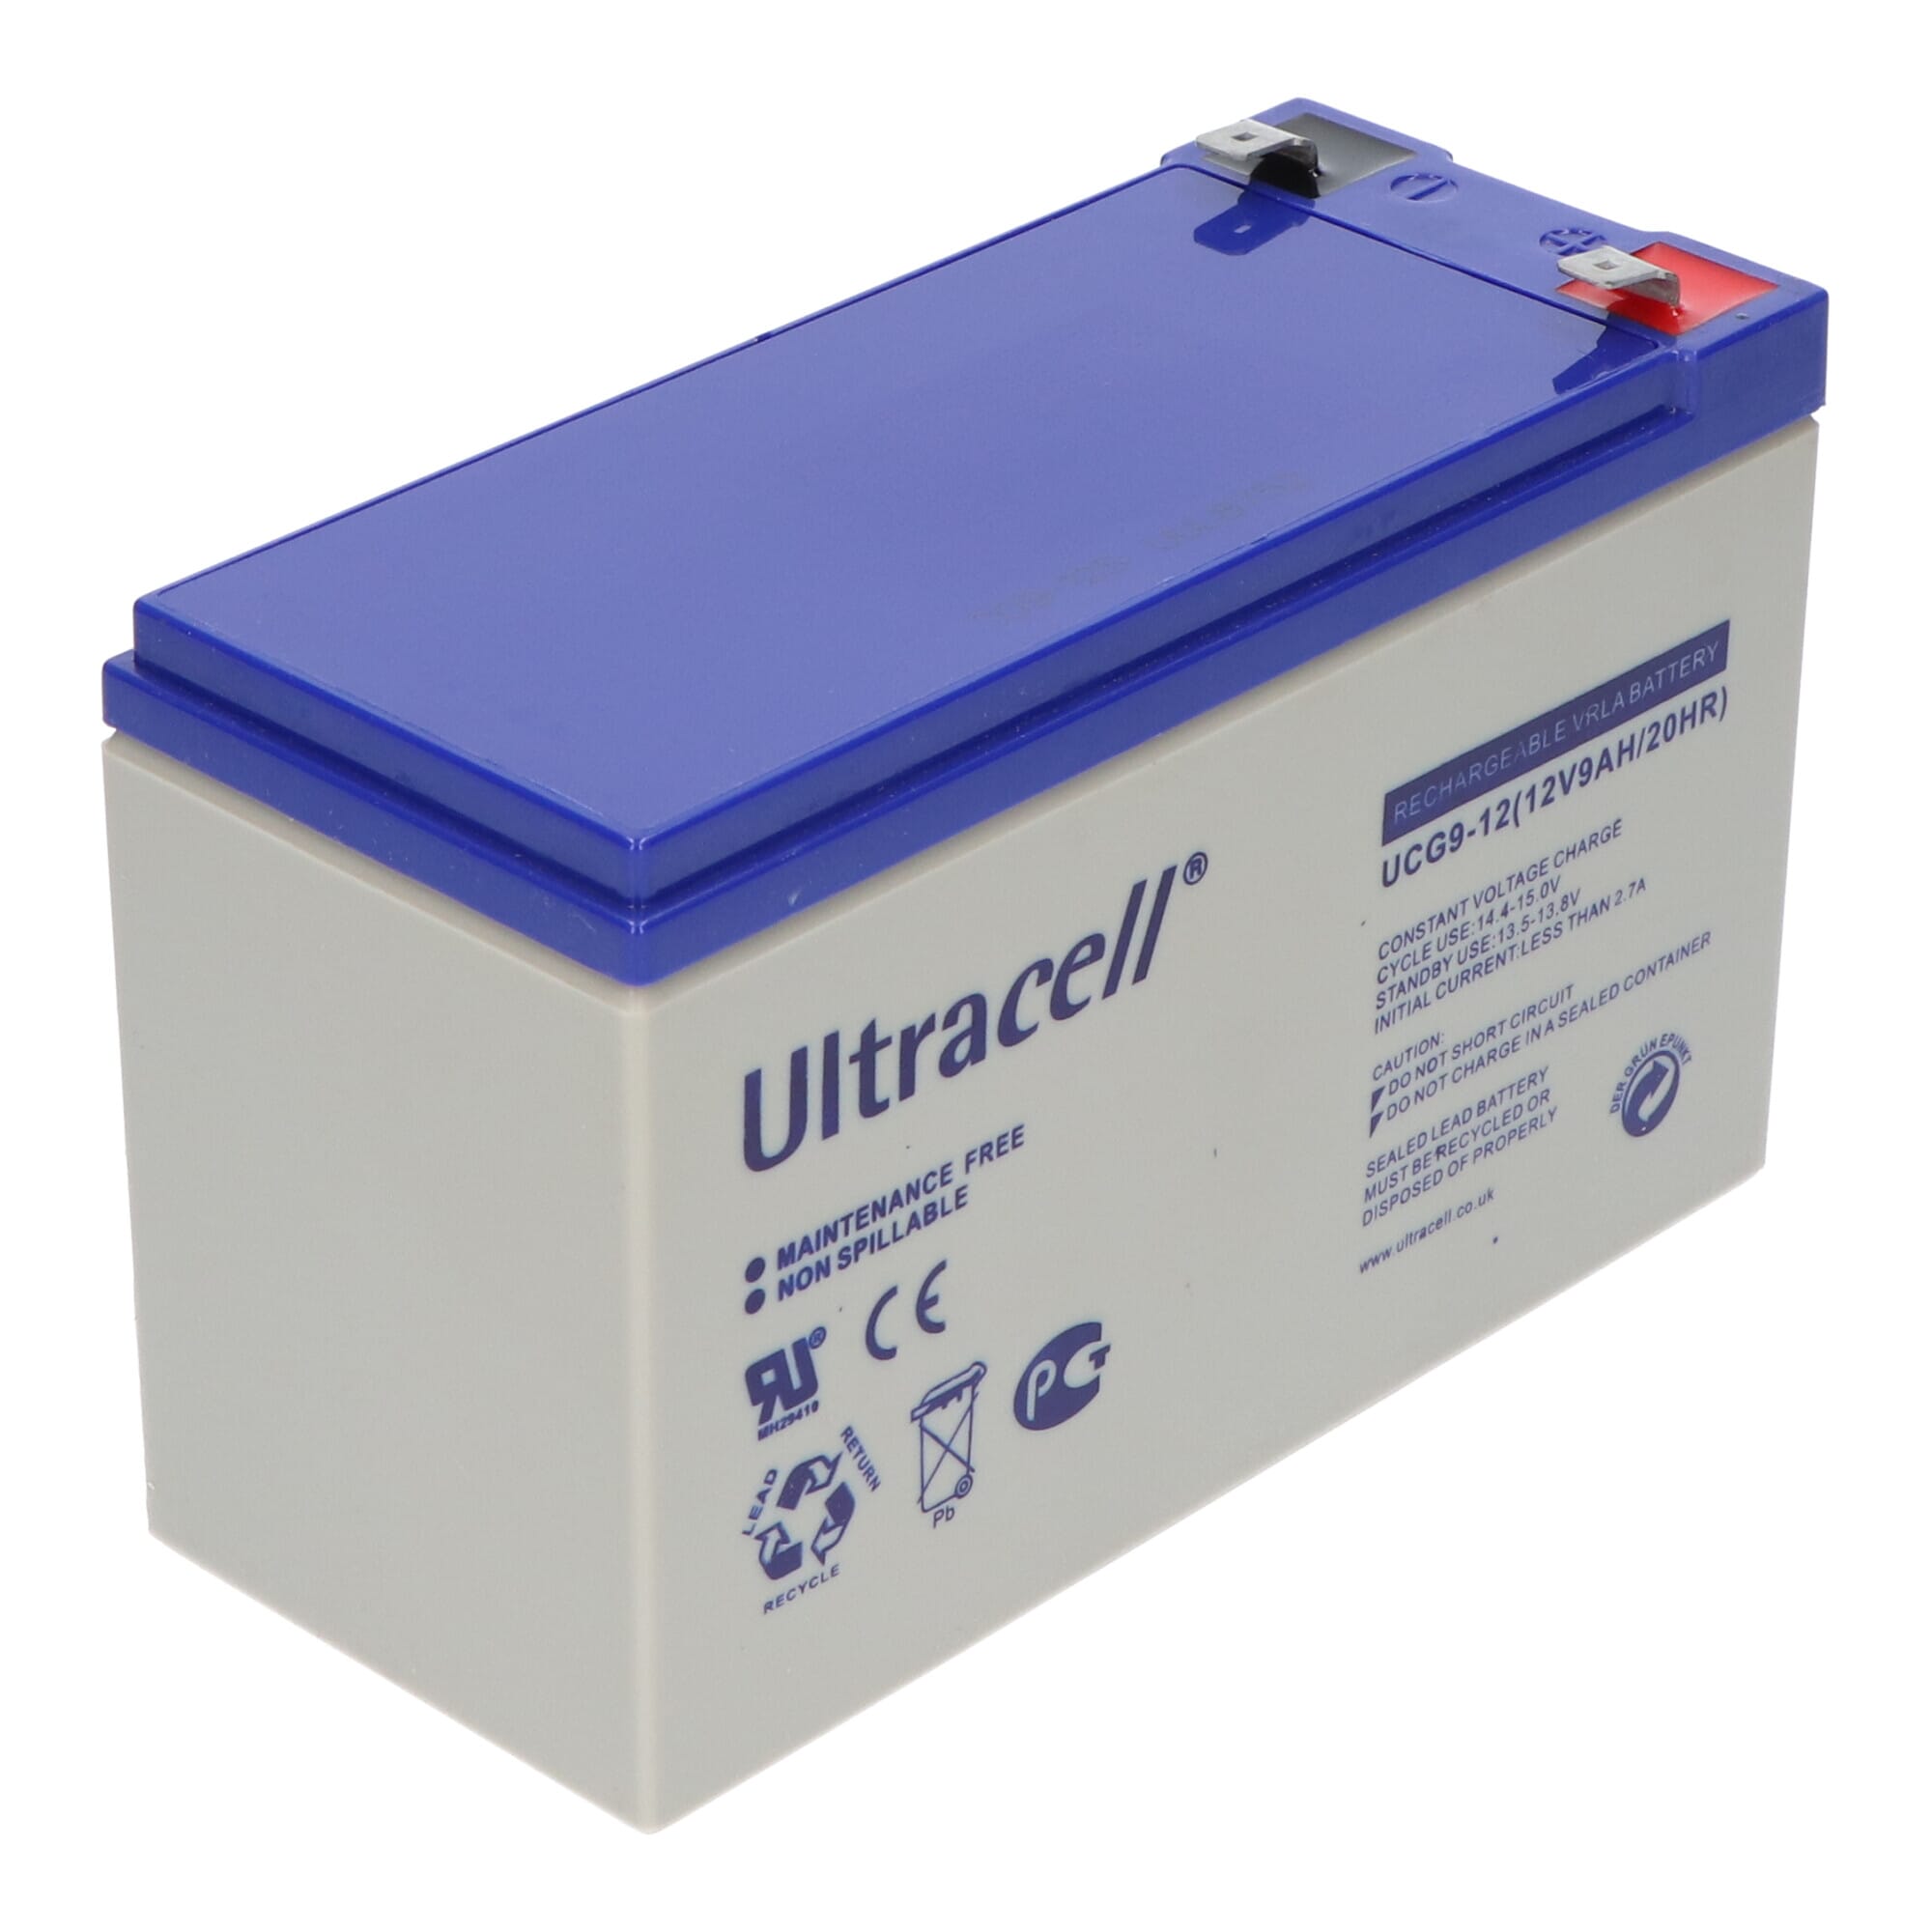 Ultracell DCGA/Deep Cycle Gel accu 12v (UCG9-12) - ReplaceDirect.nl